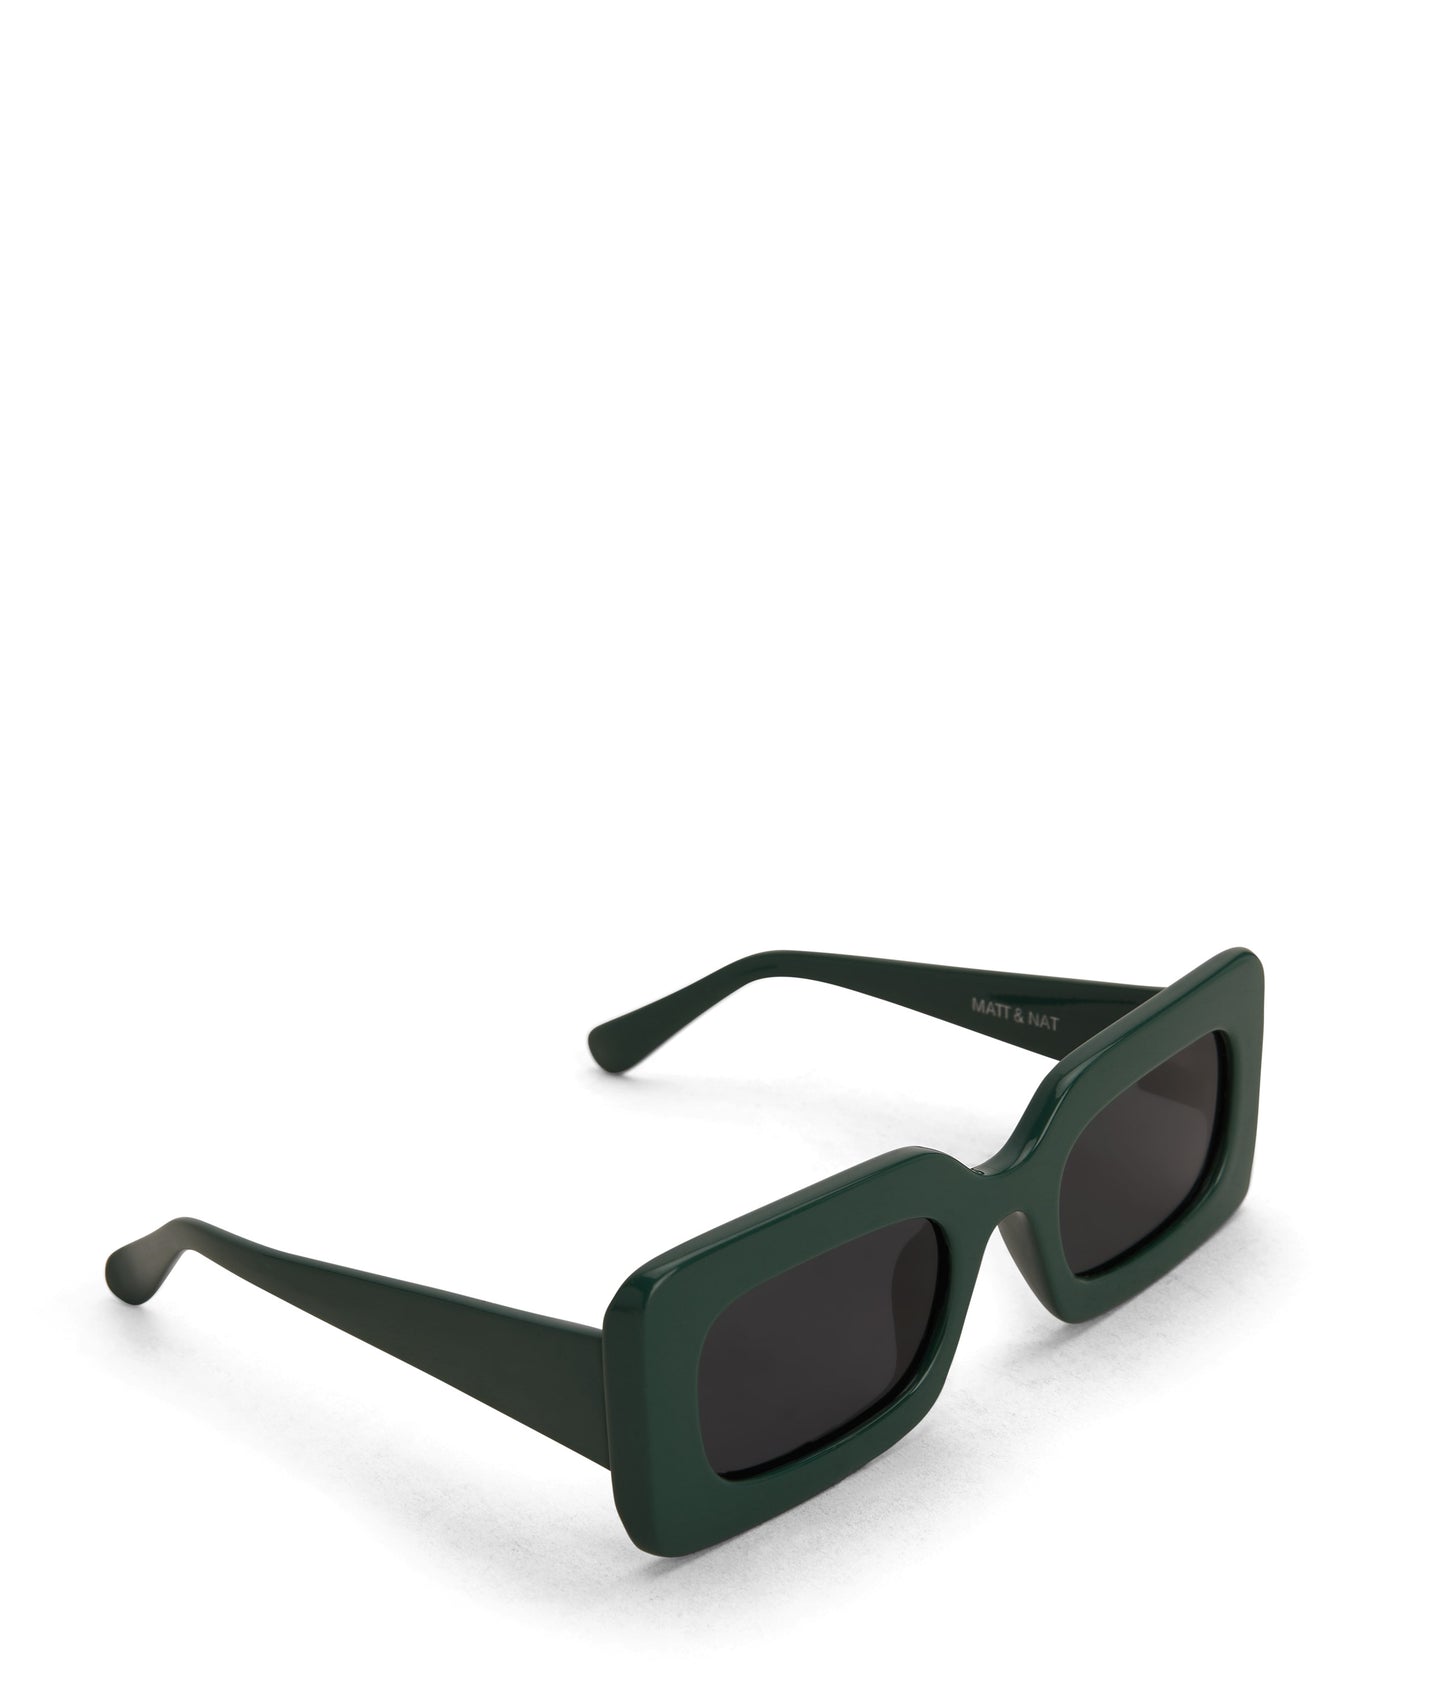 TITO Rectangle Sunglasses | Color: Green - variant::pine